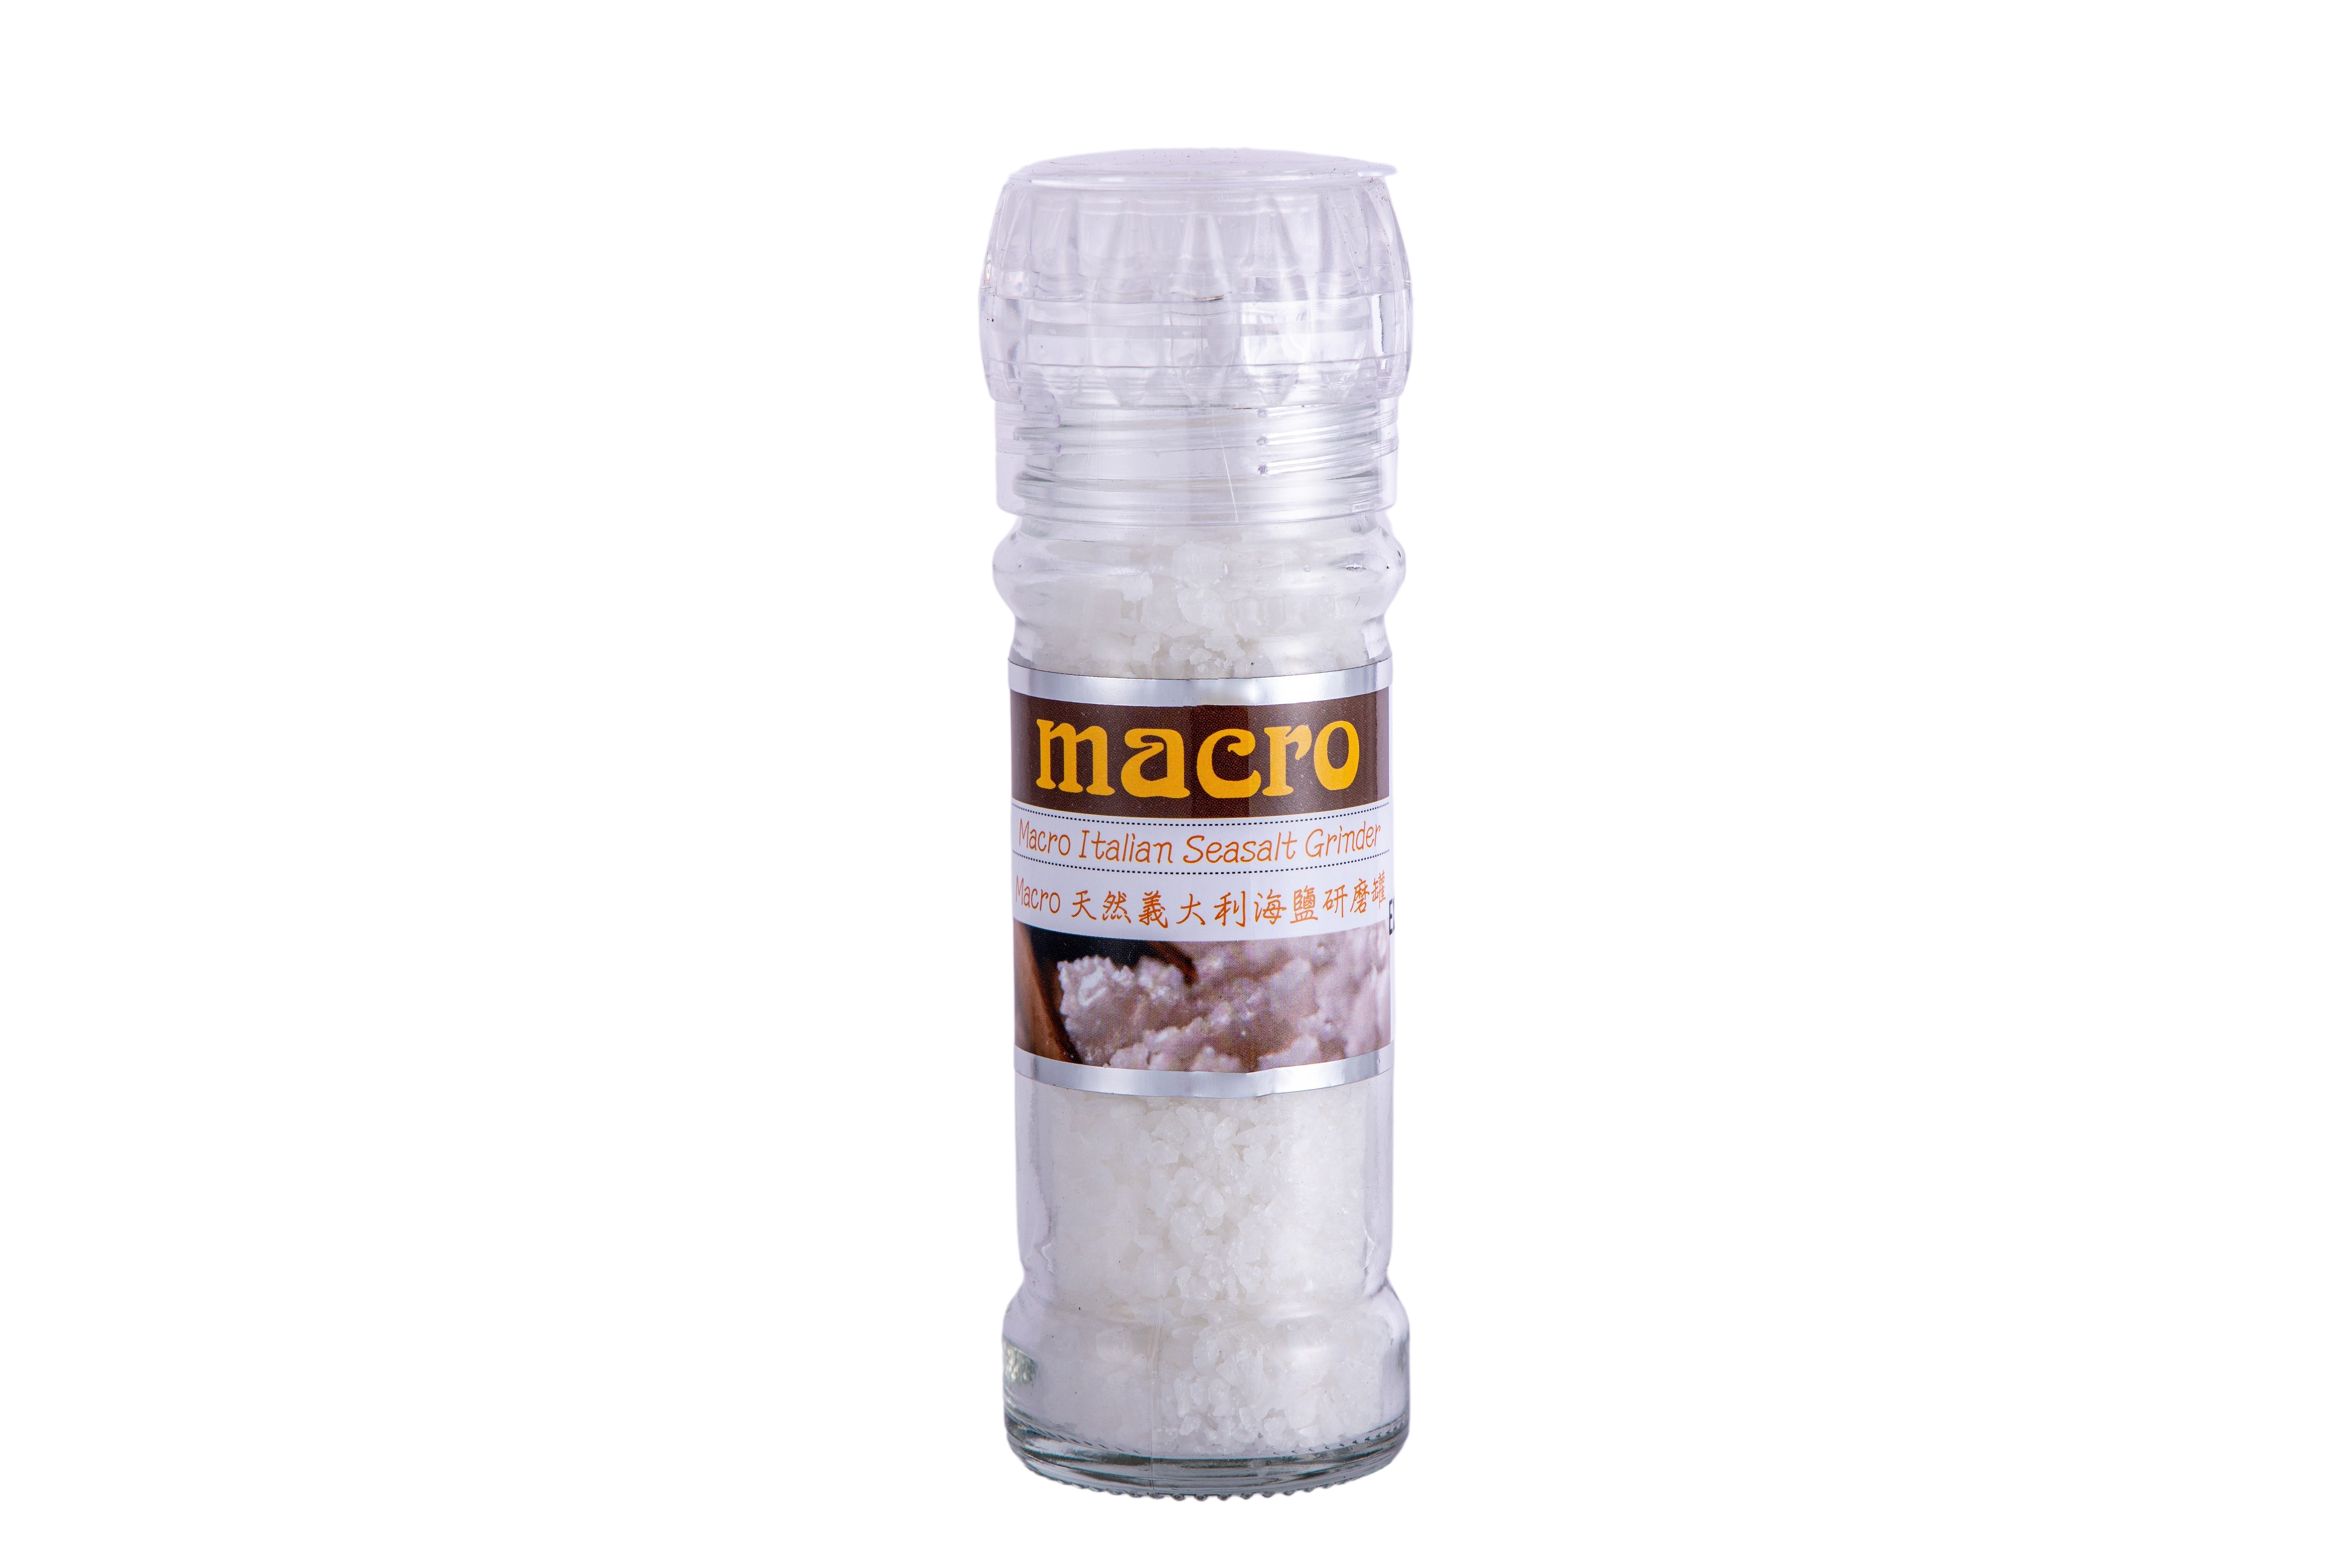 macro 天然義大利海鹽研磨罐